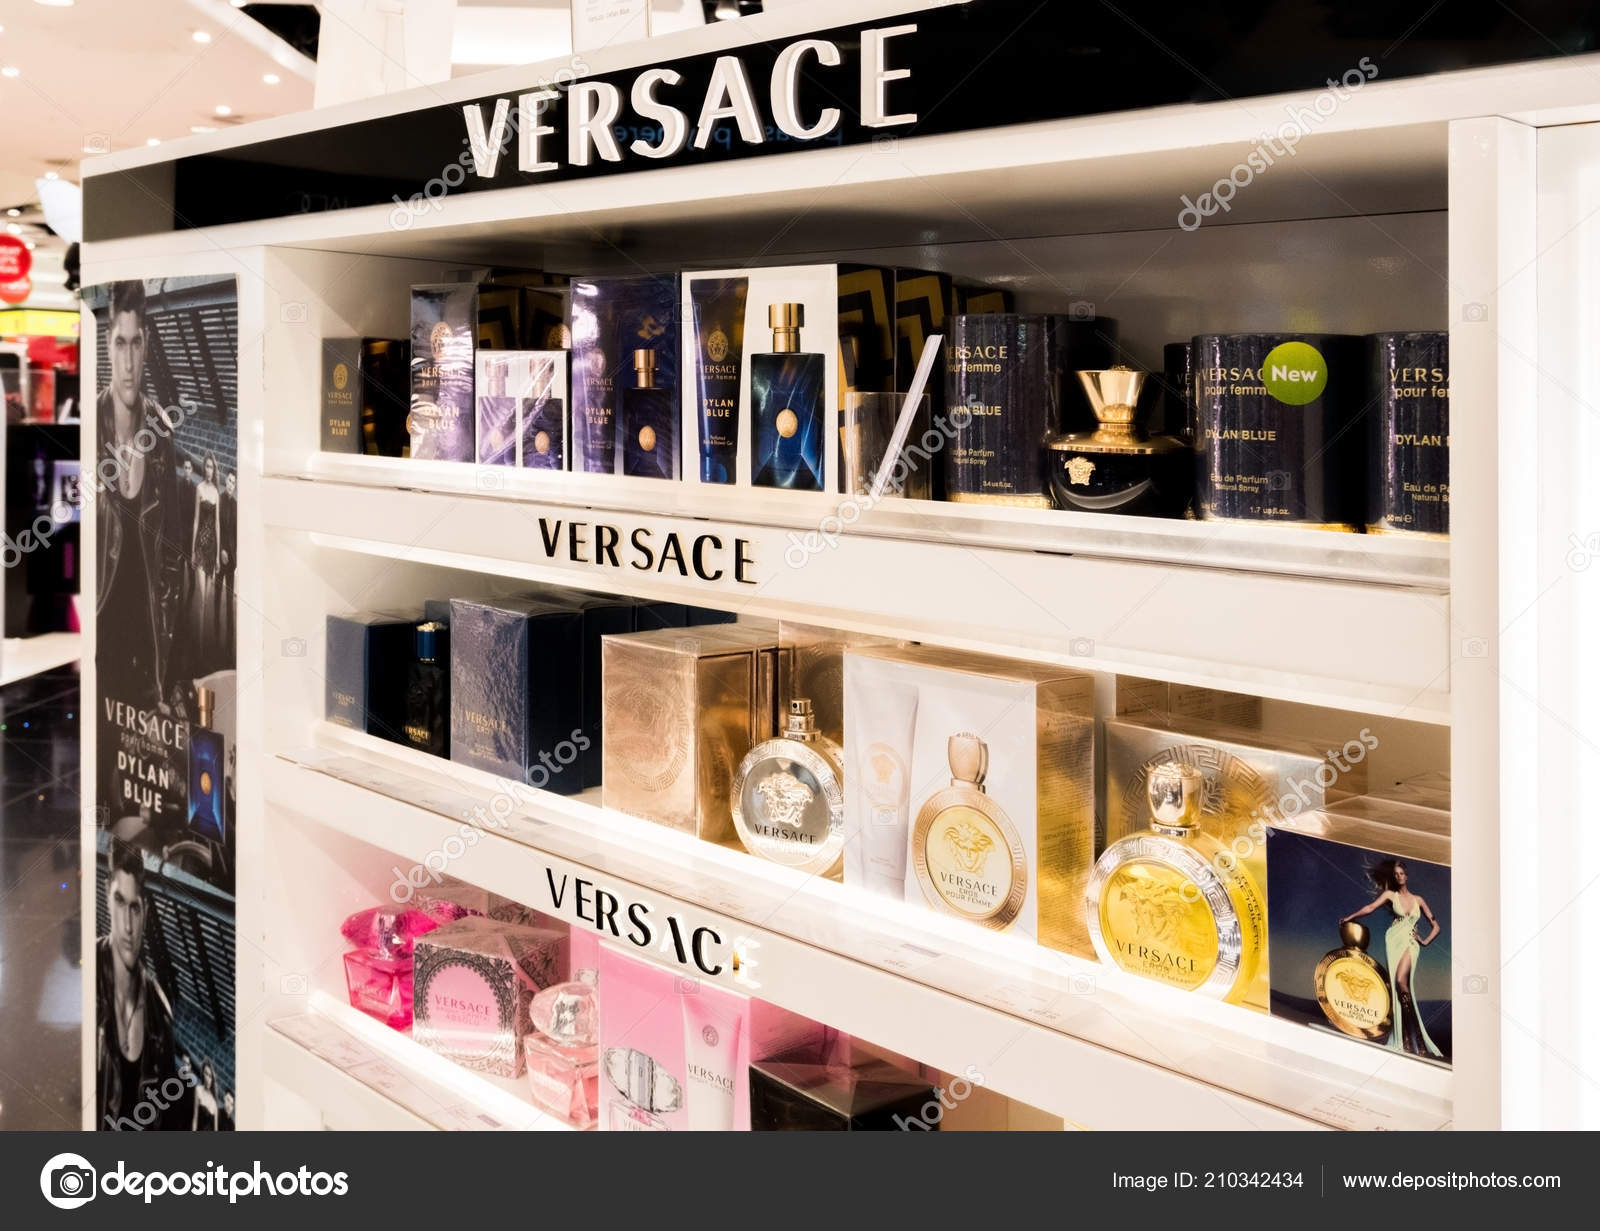 new versace perfume 2018